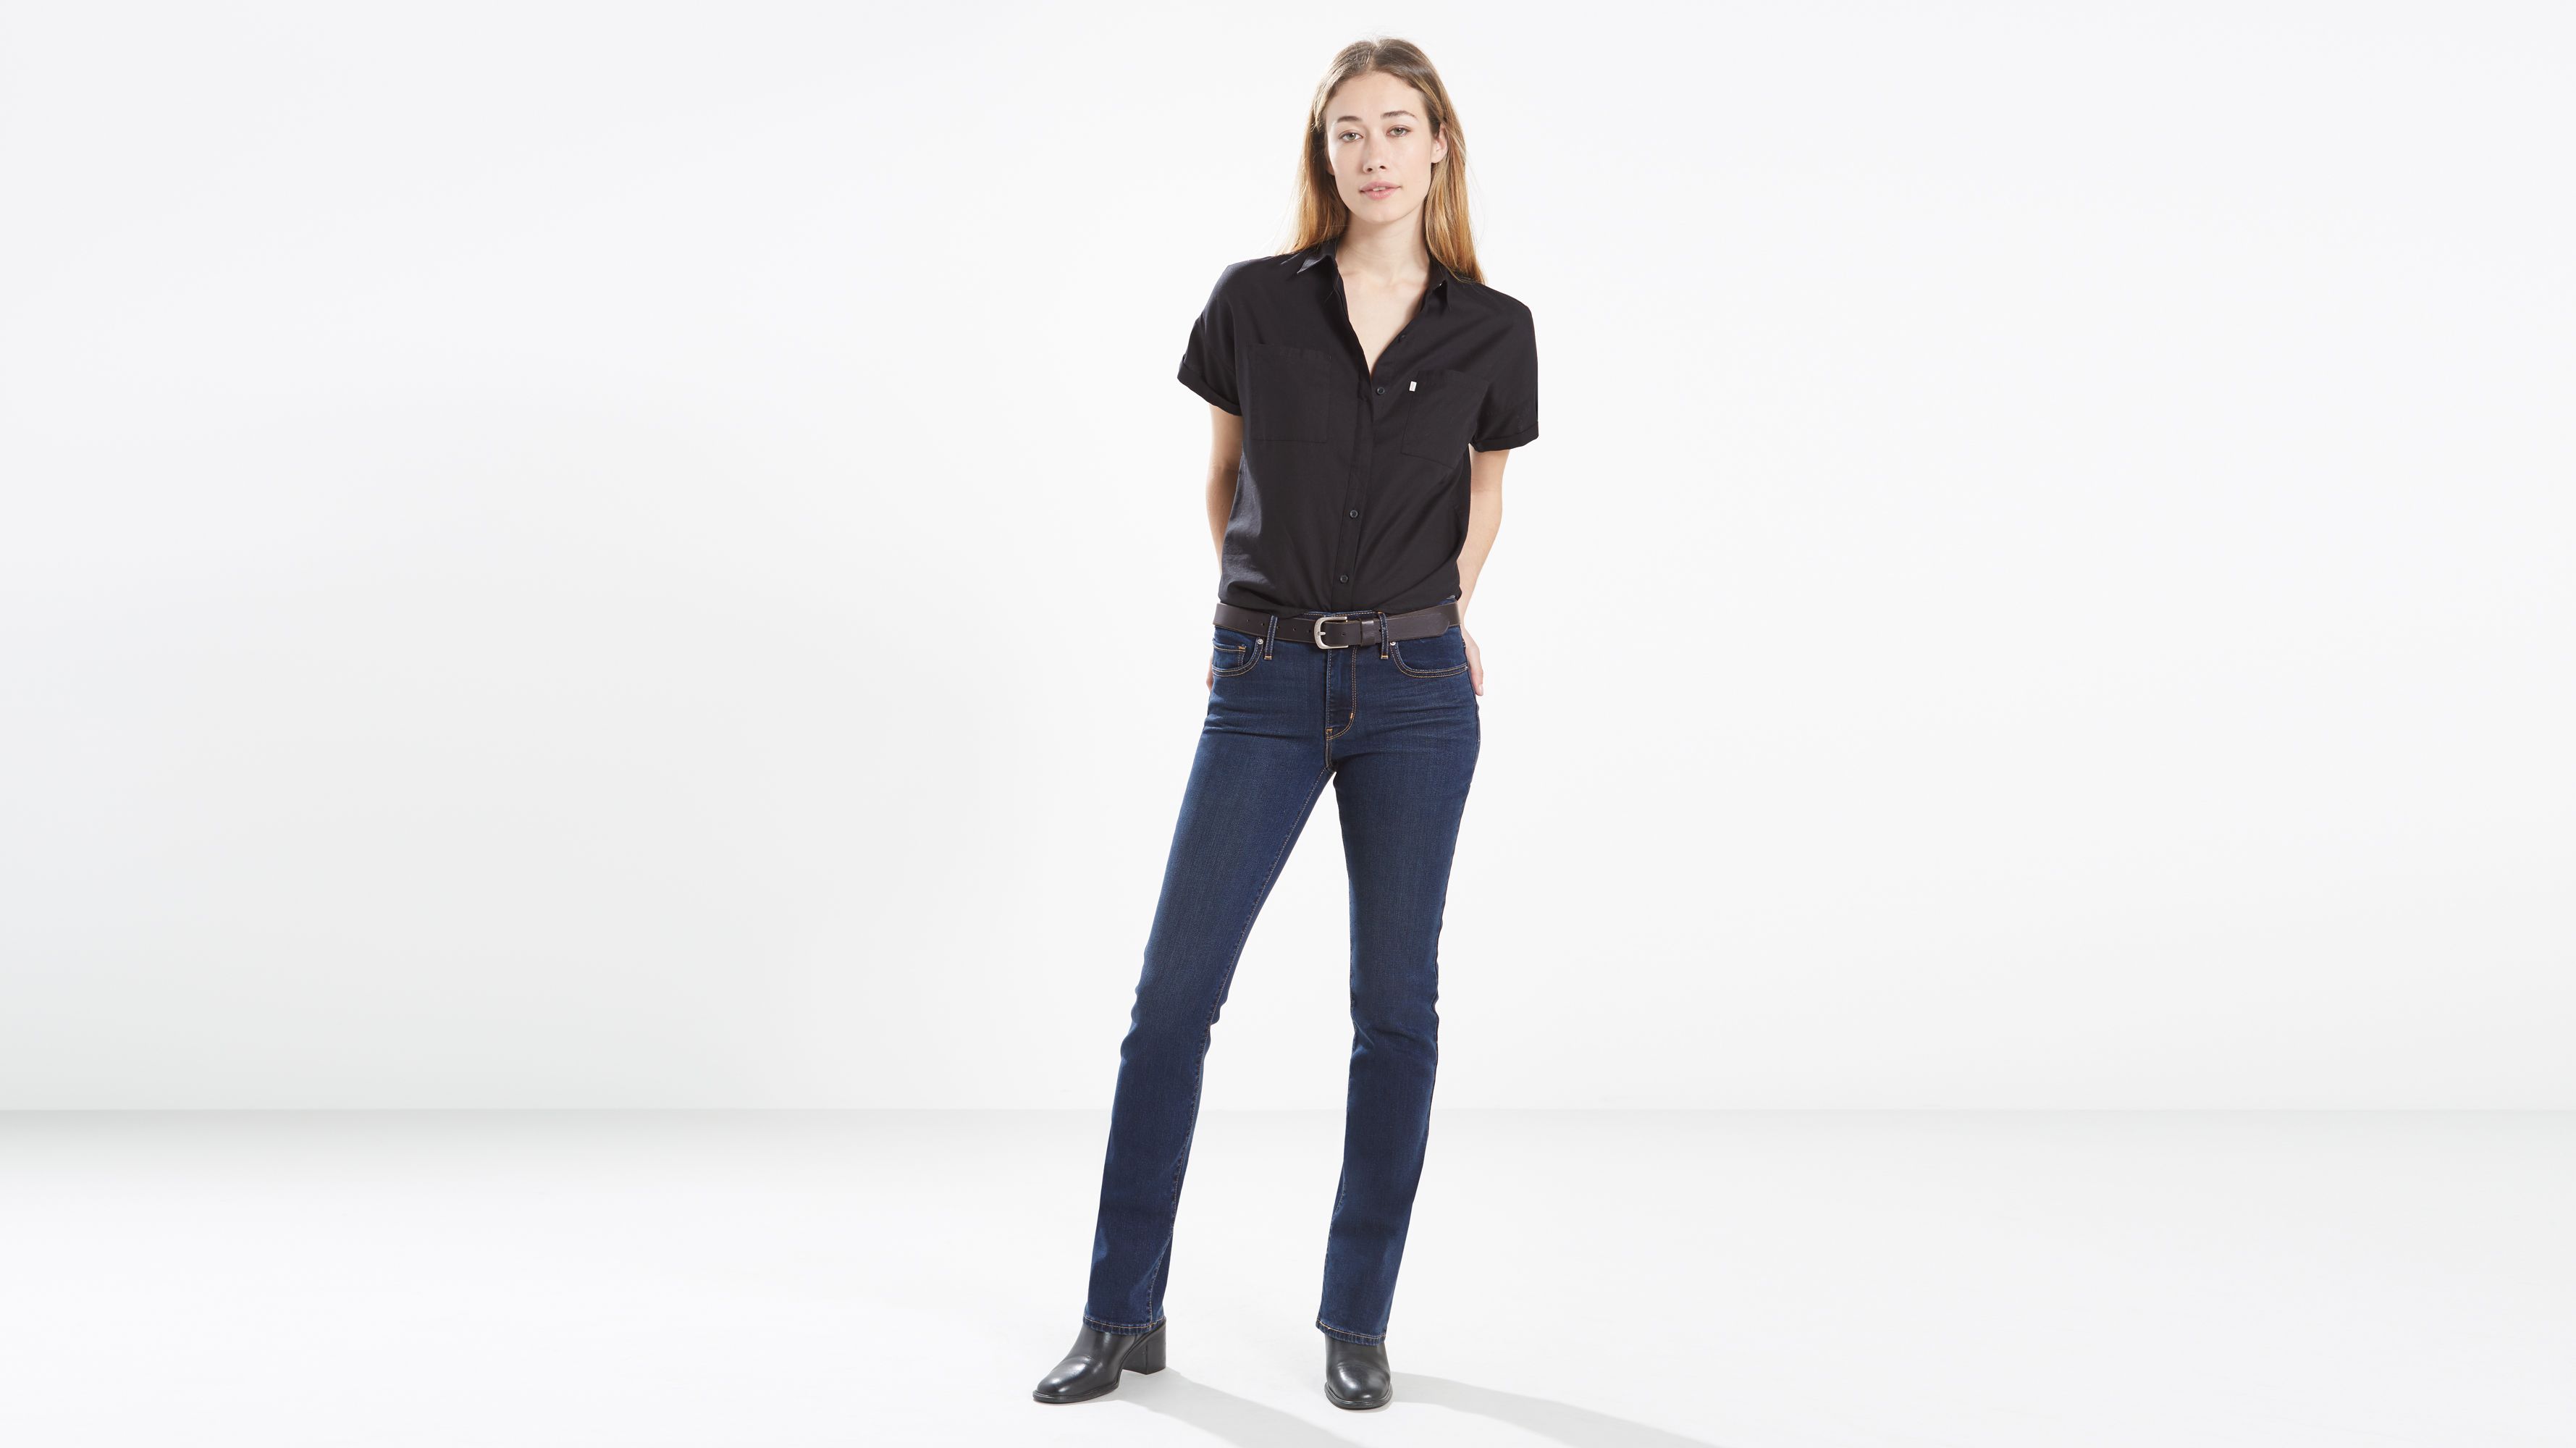 levi's 714 straight women's jeans